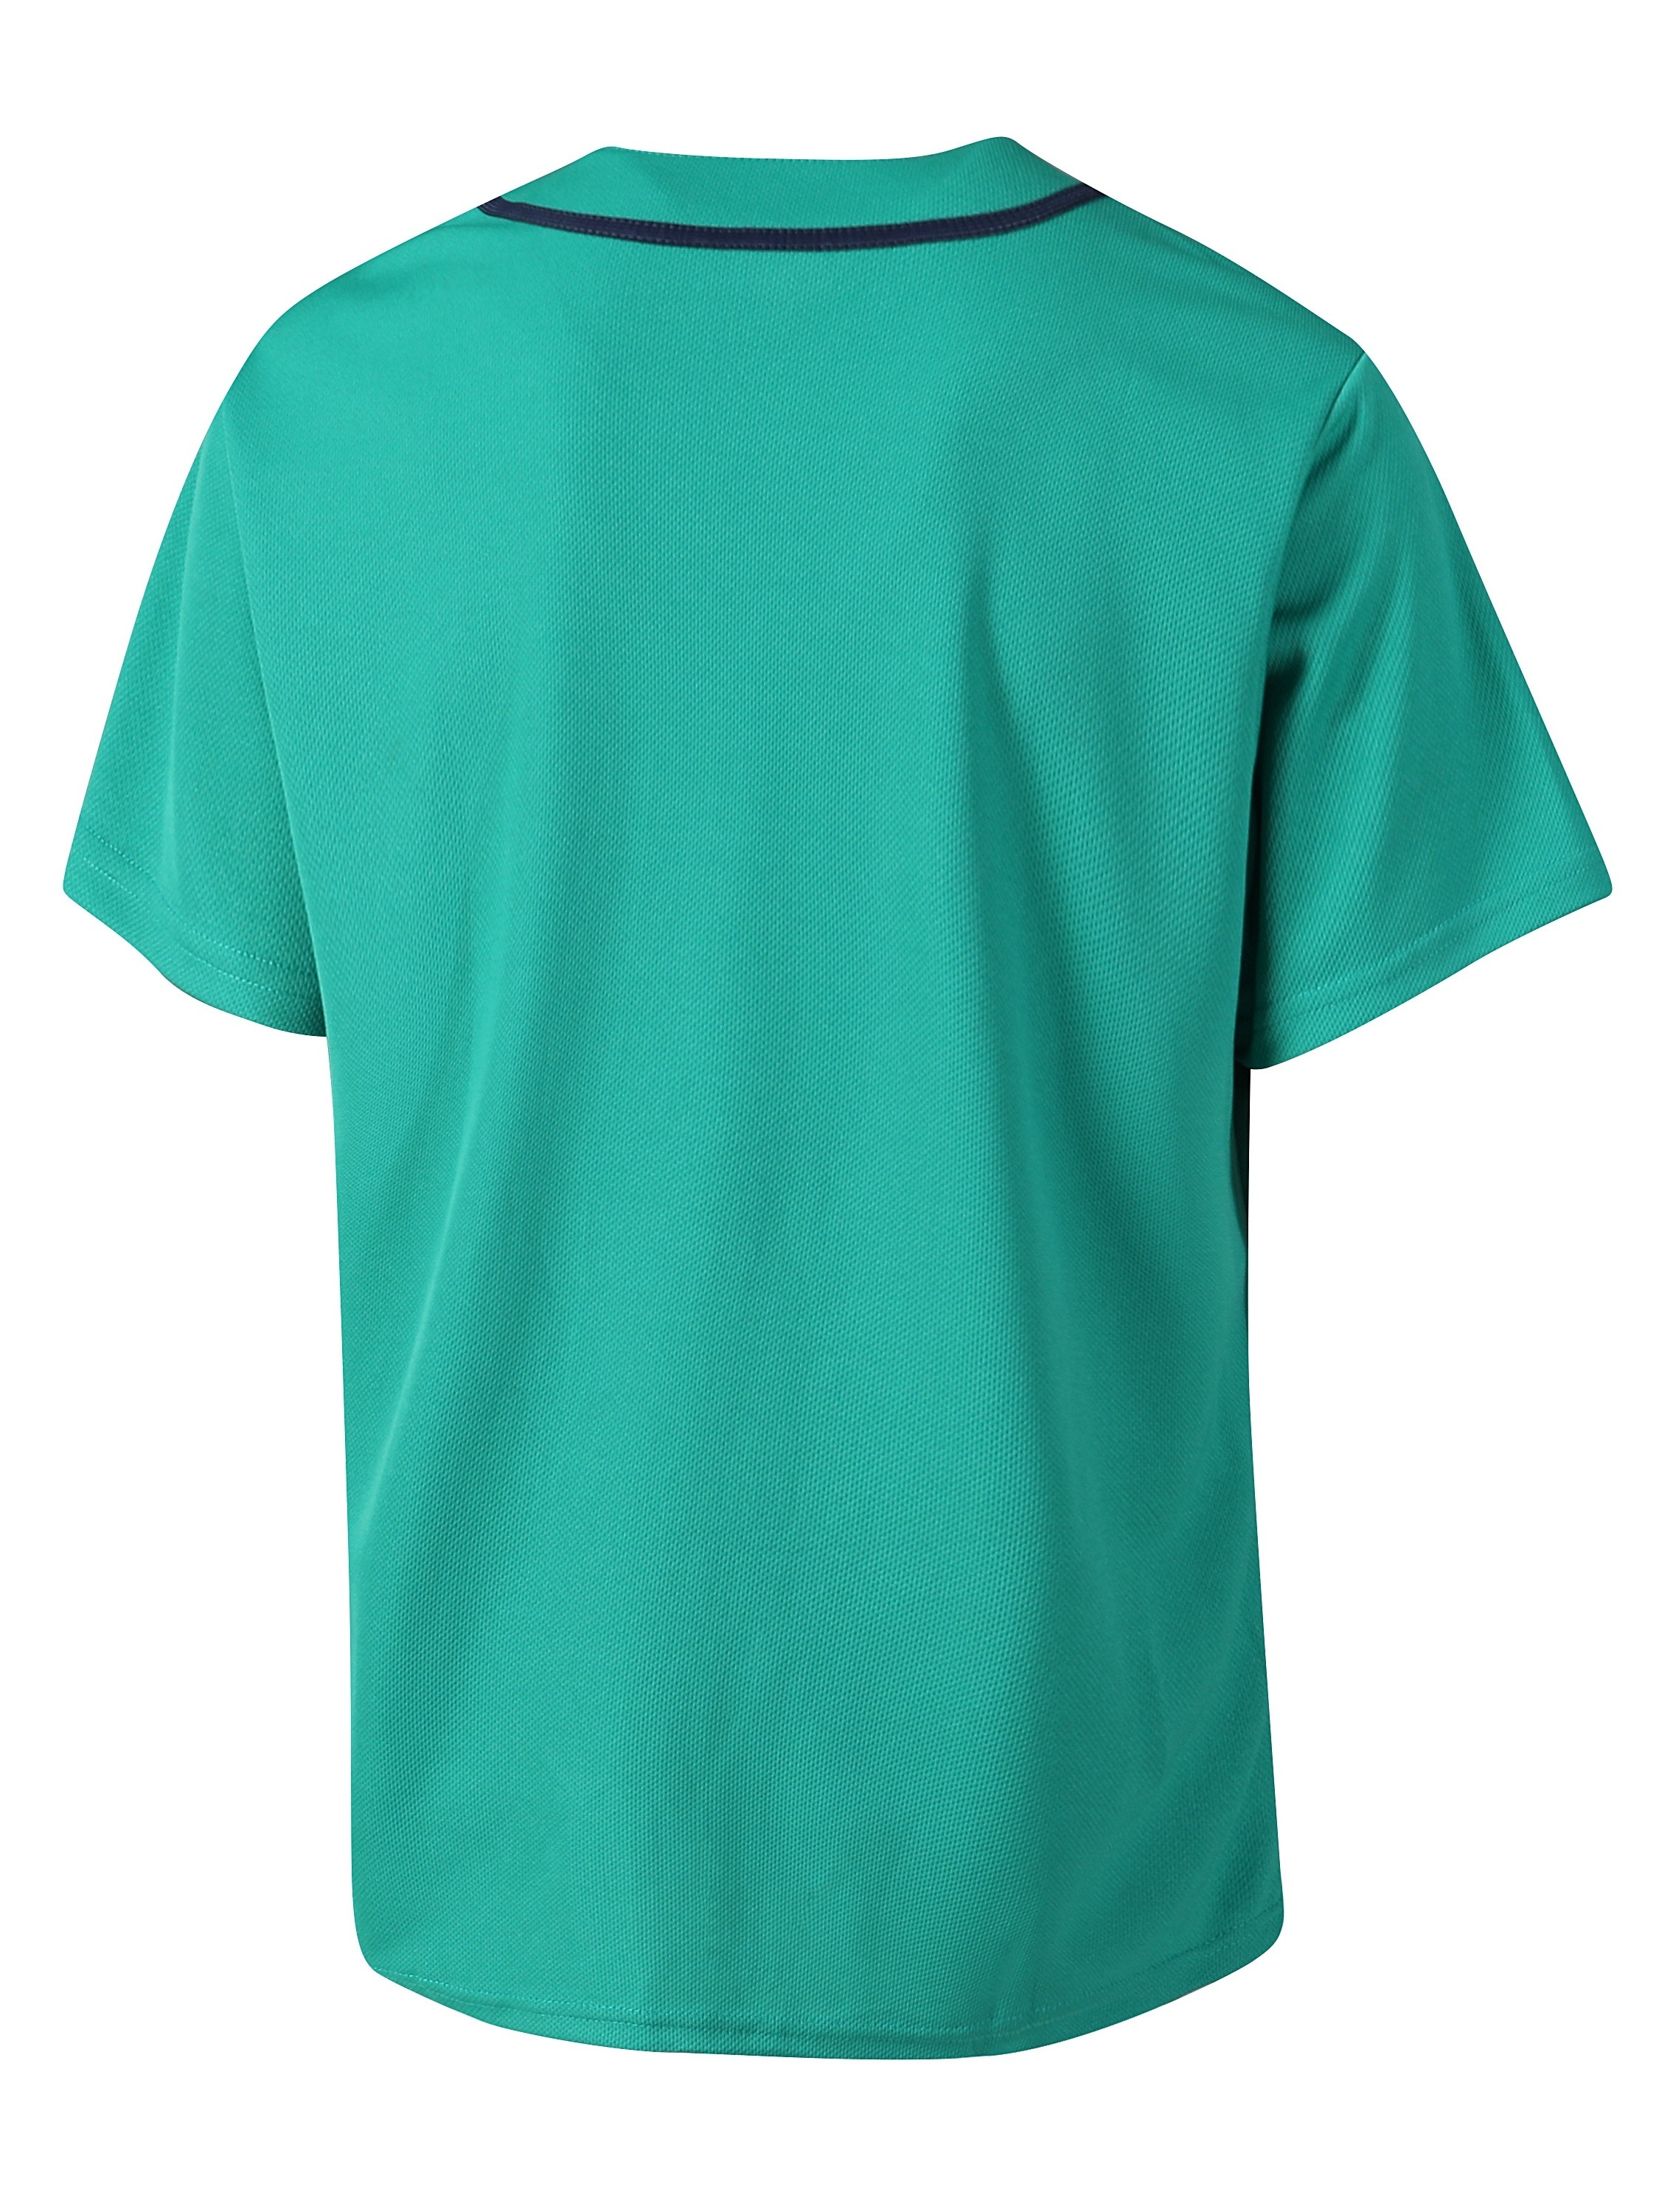 Men's Blank Baseball Jerseys Plain Casual Short-sleeved Button T-Shirts, T Shirt, Tees, Simple Fashion Sports Uniform Tops,Temu